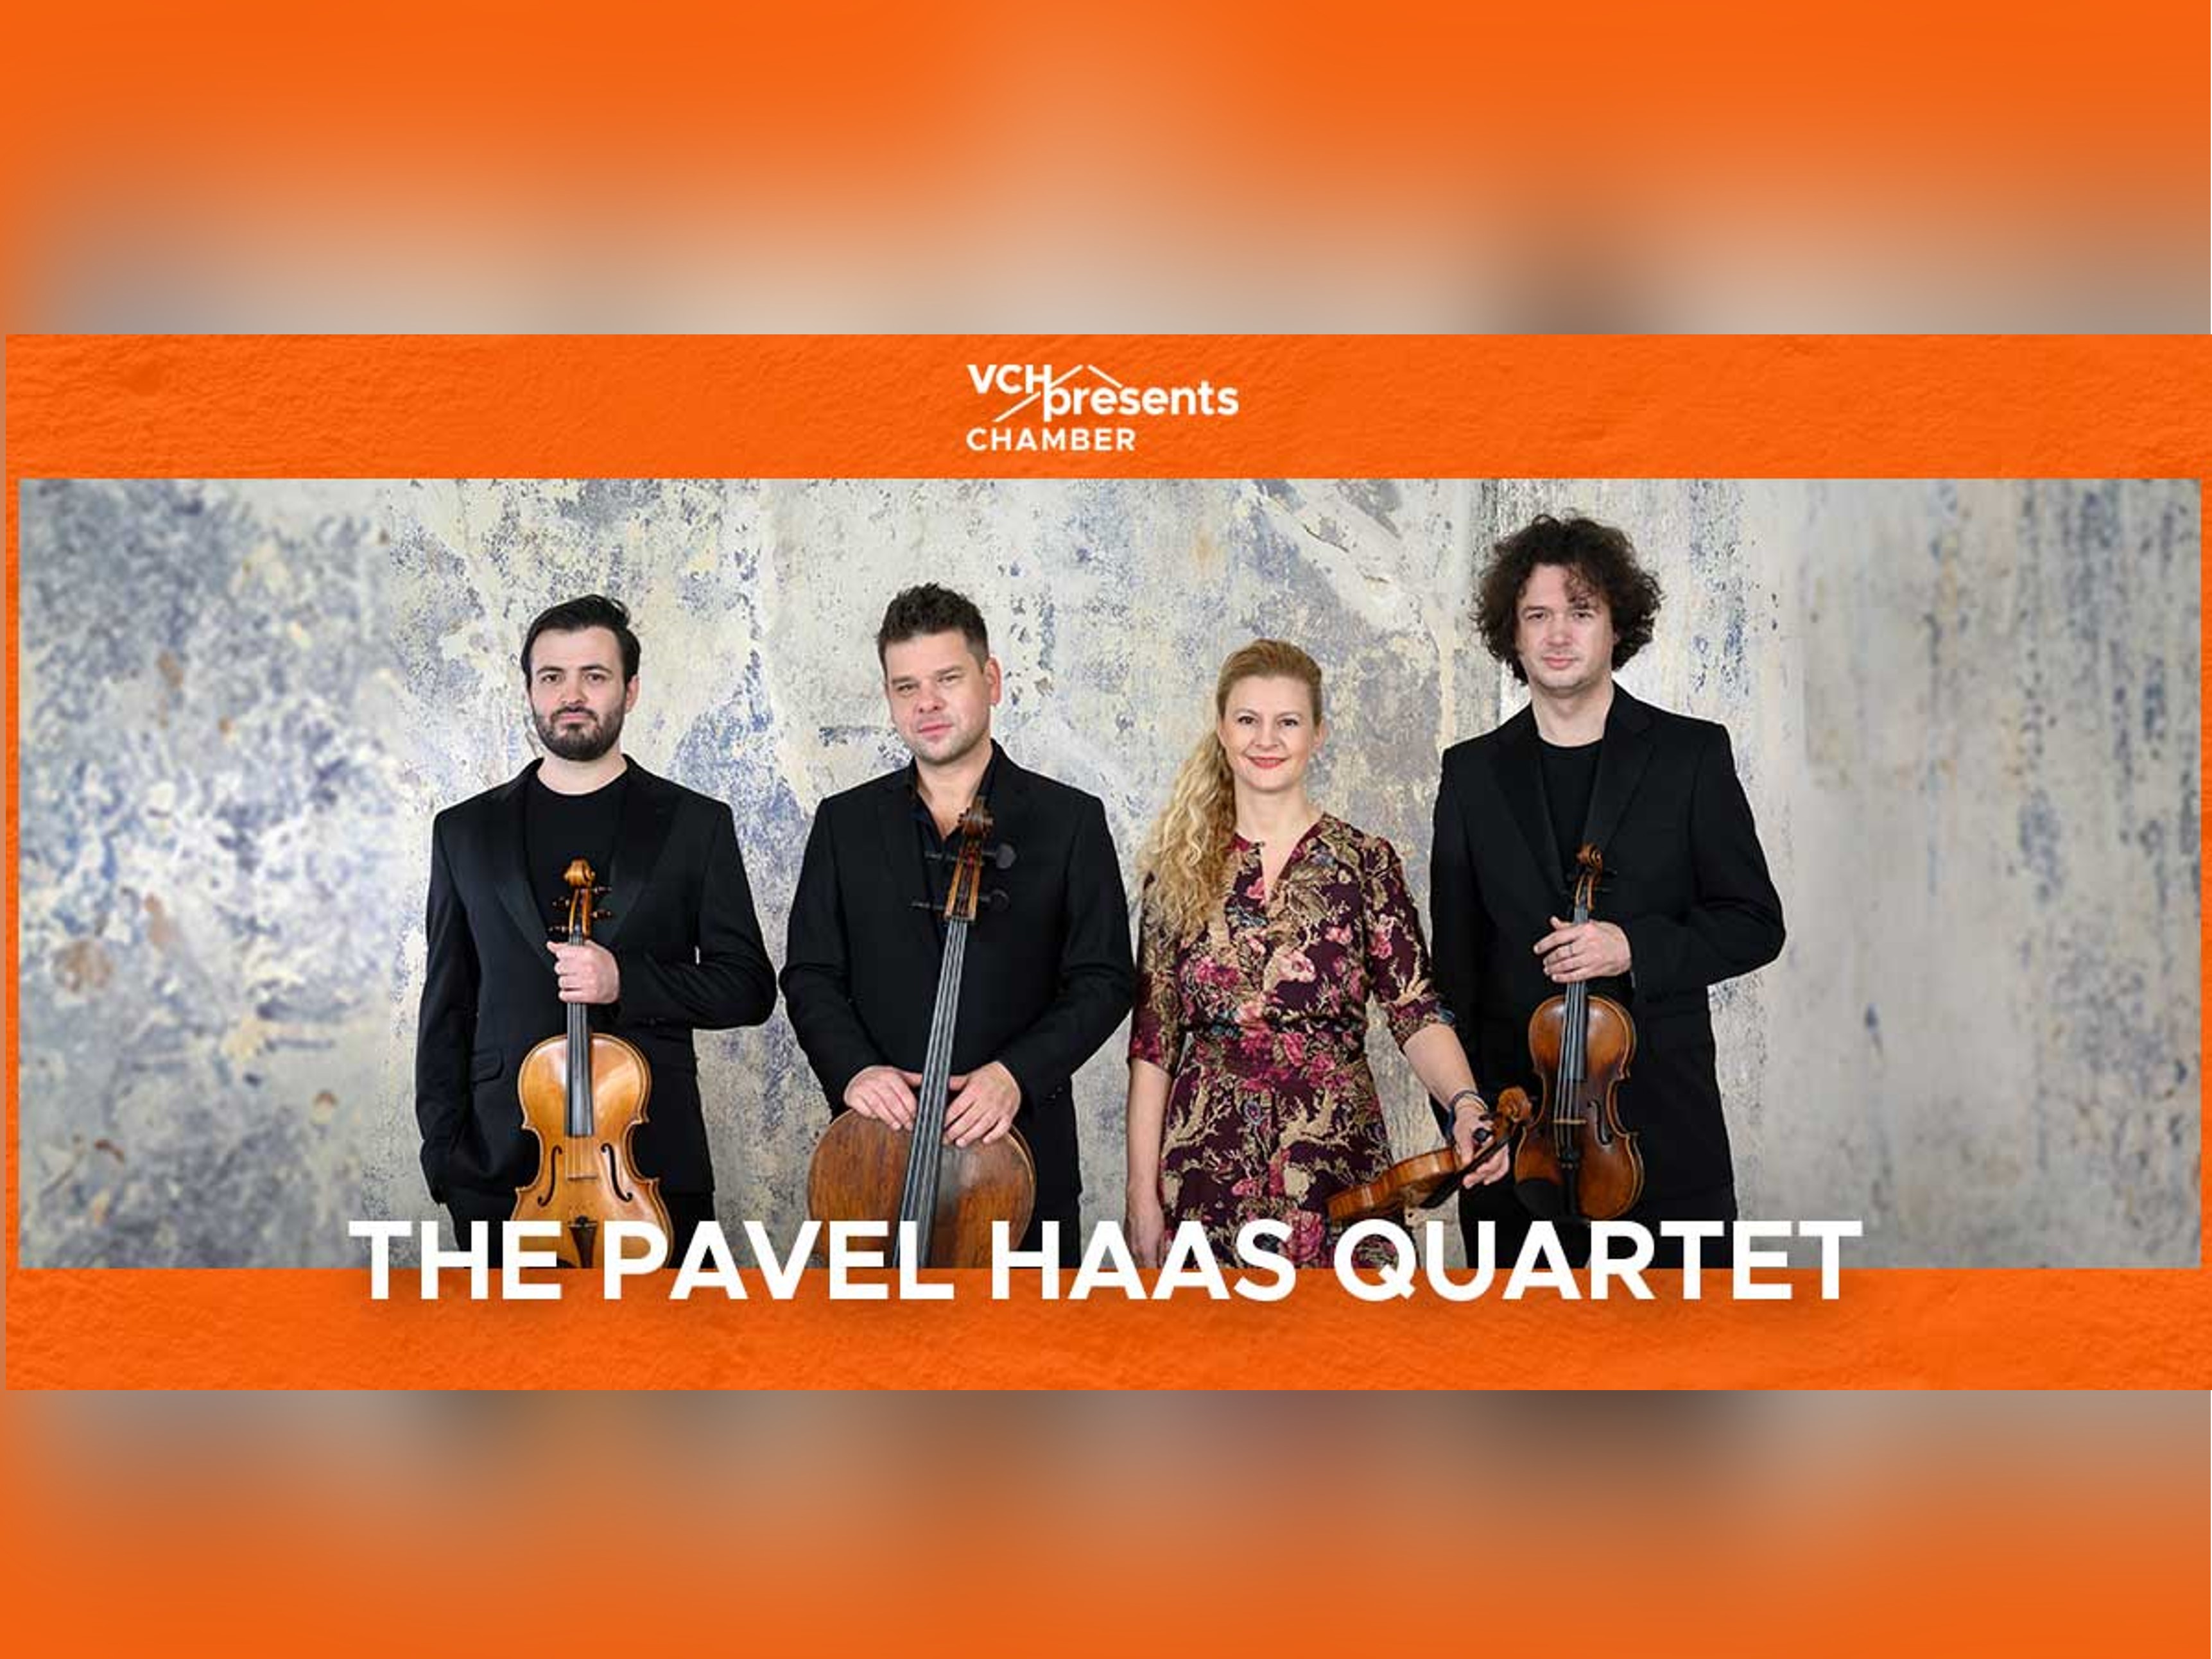 VCHpresents Chamber: The Pavel Haas Quartet